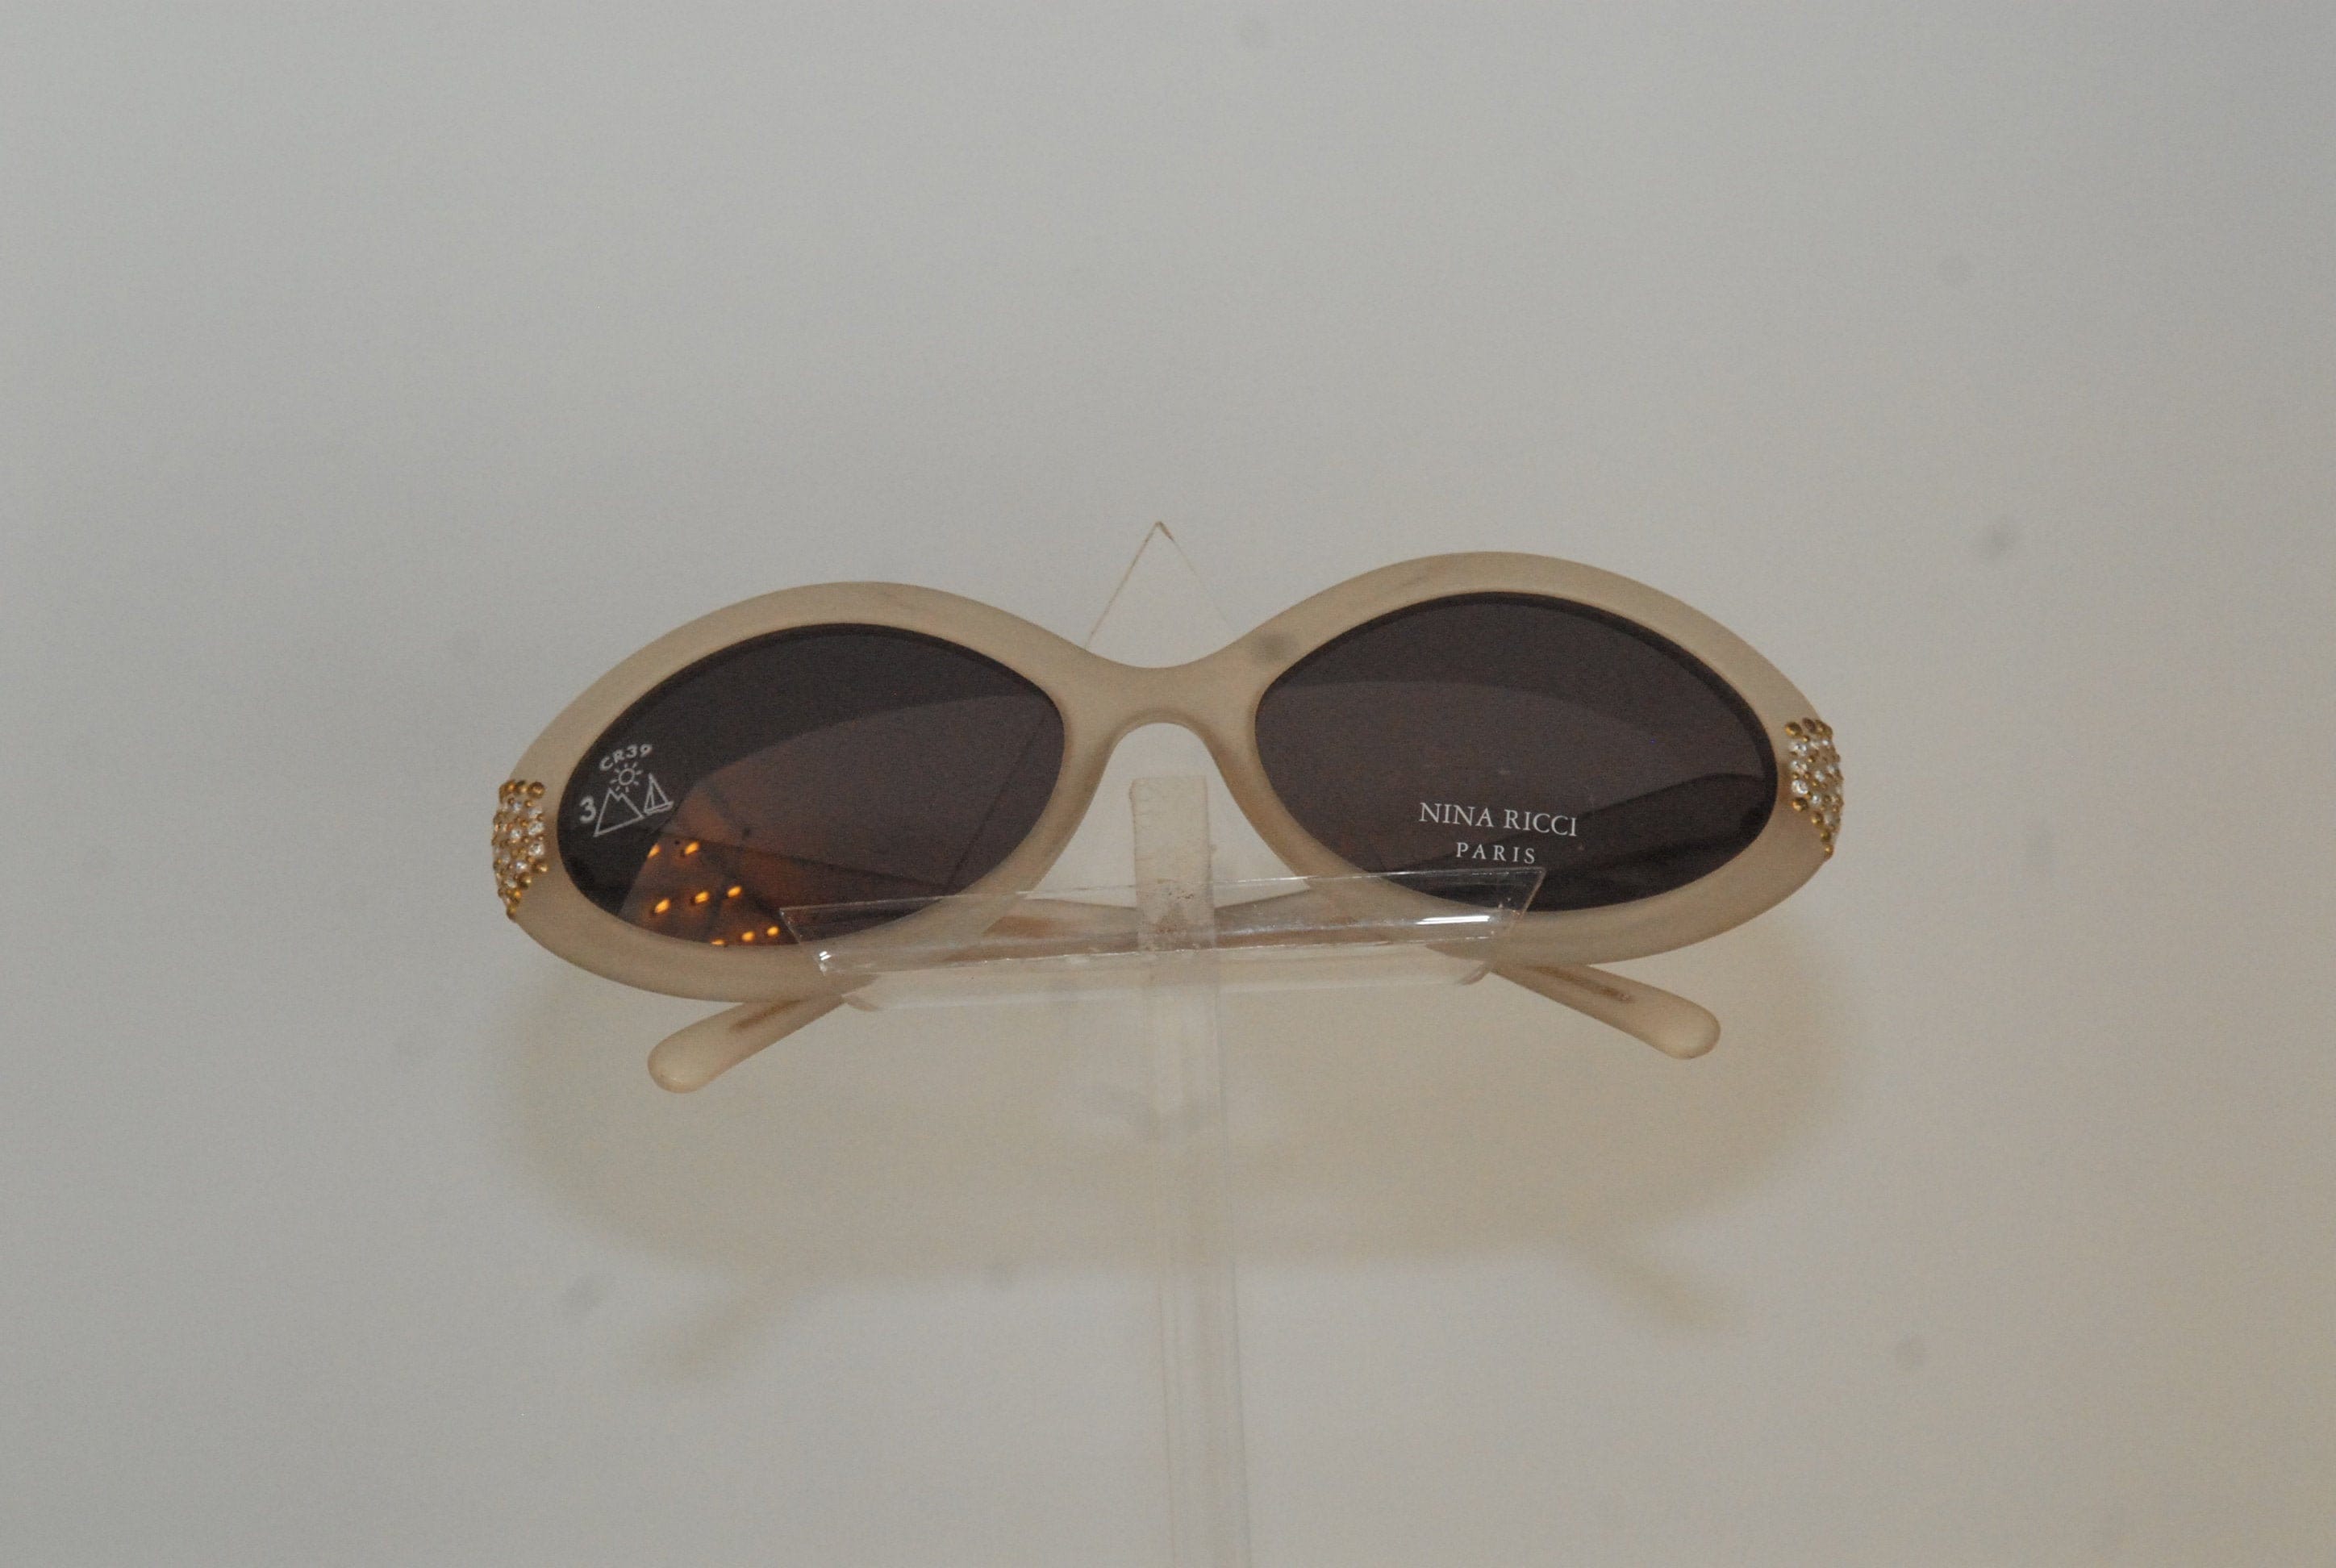 Nina Ricci Sunglasses Model Nr 3055 6665 From Paris - Etsy Finland